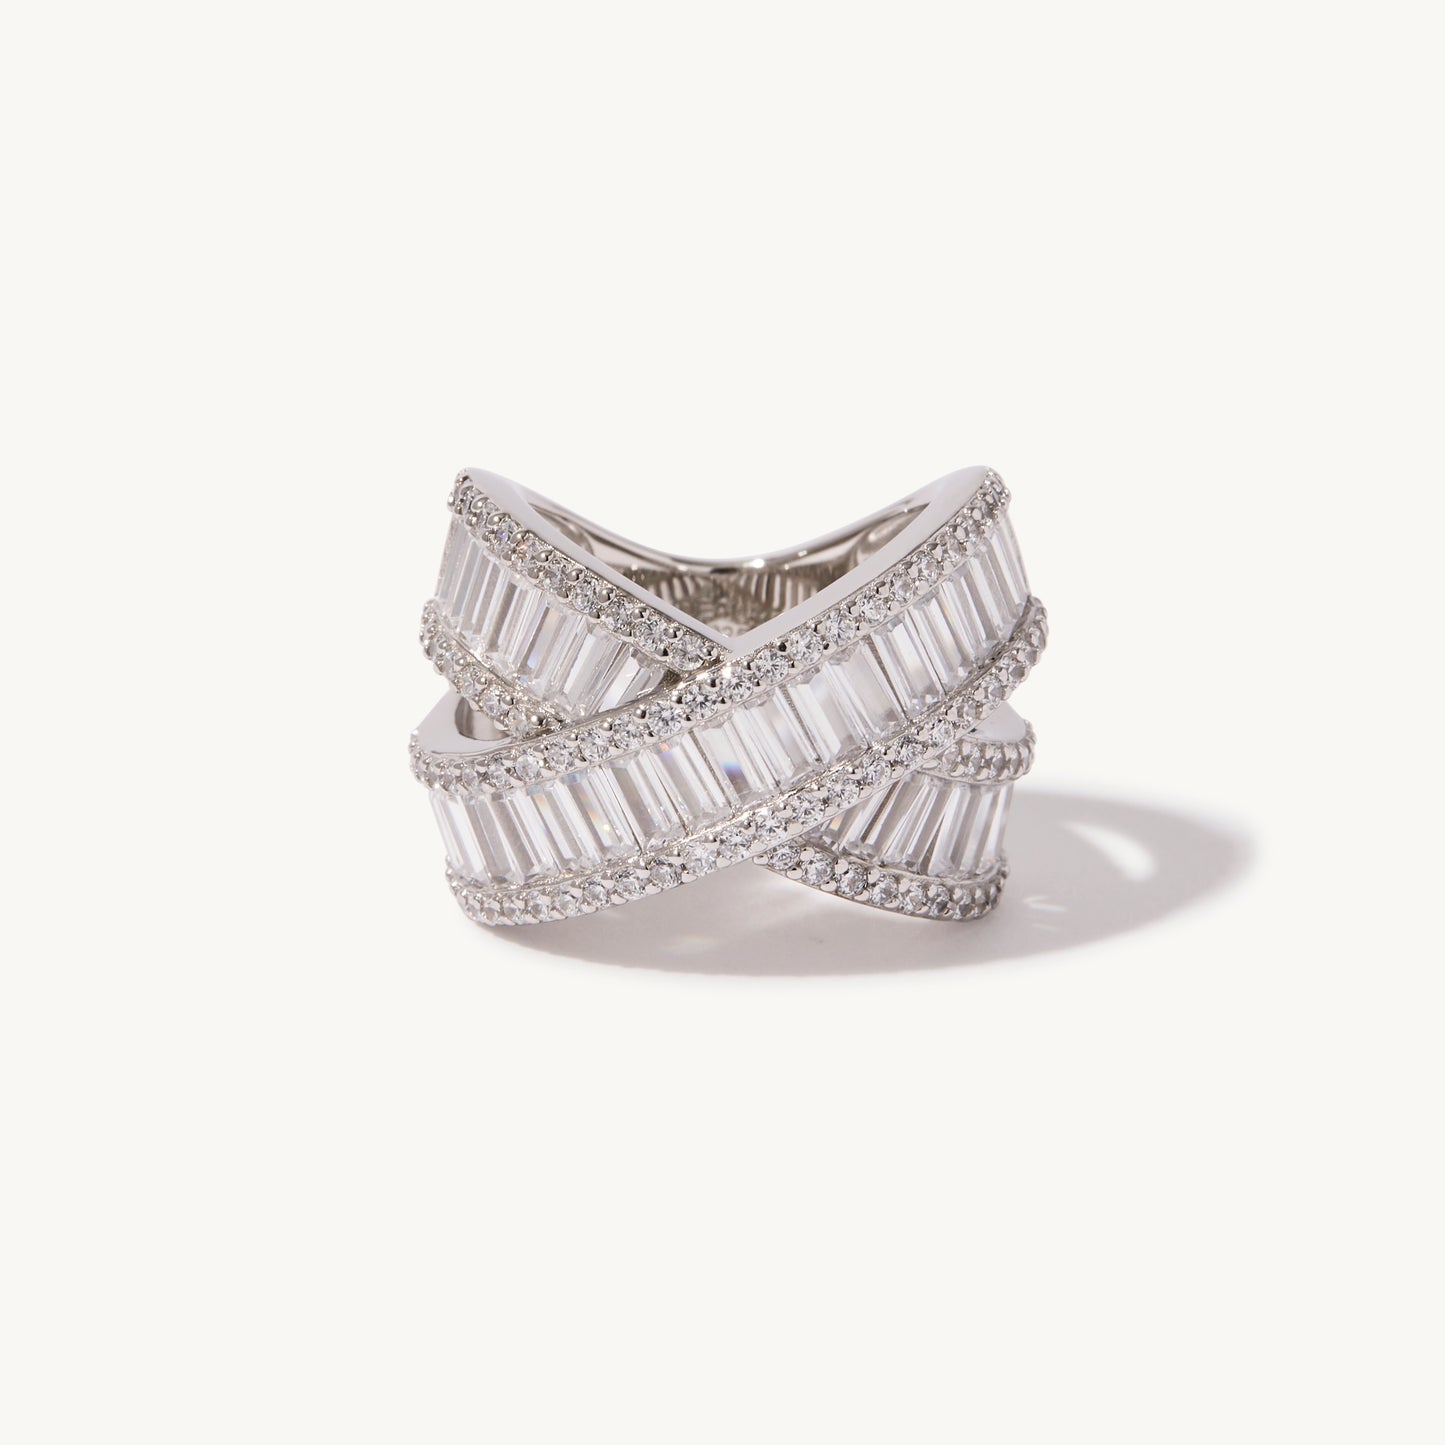 Palmira Gemstone Ring